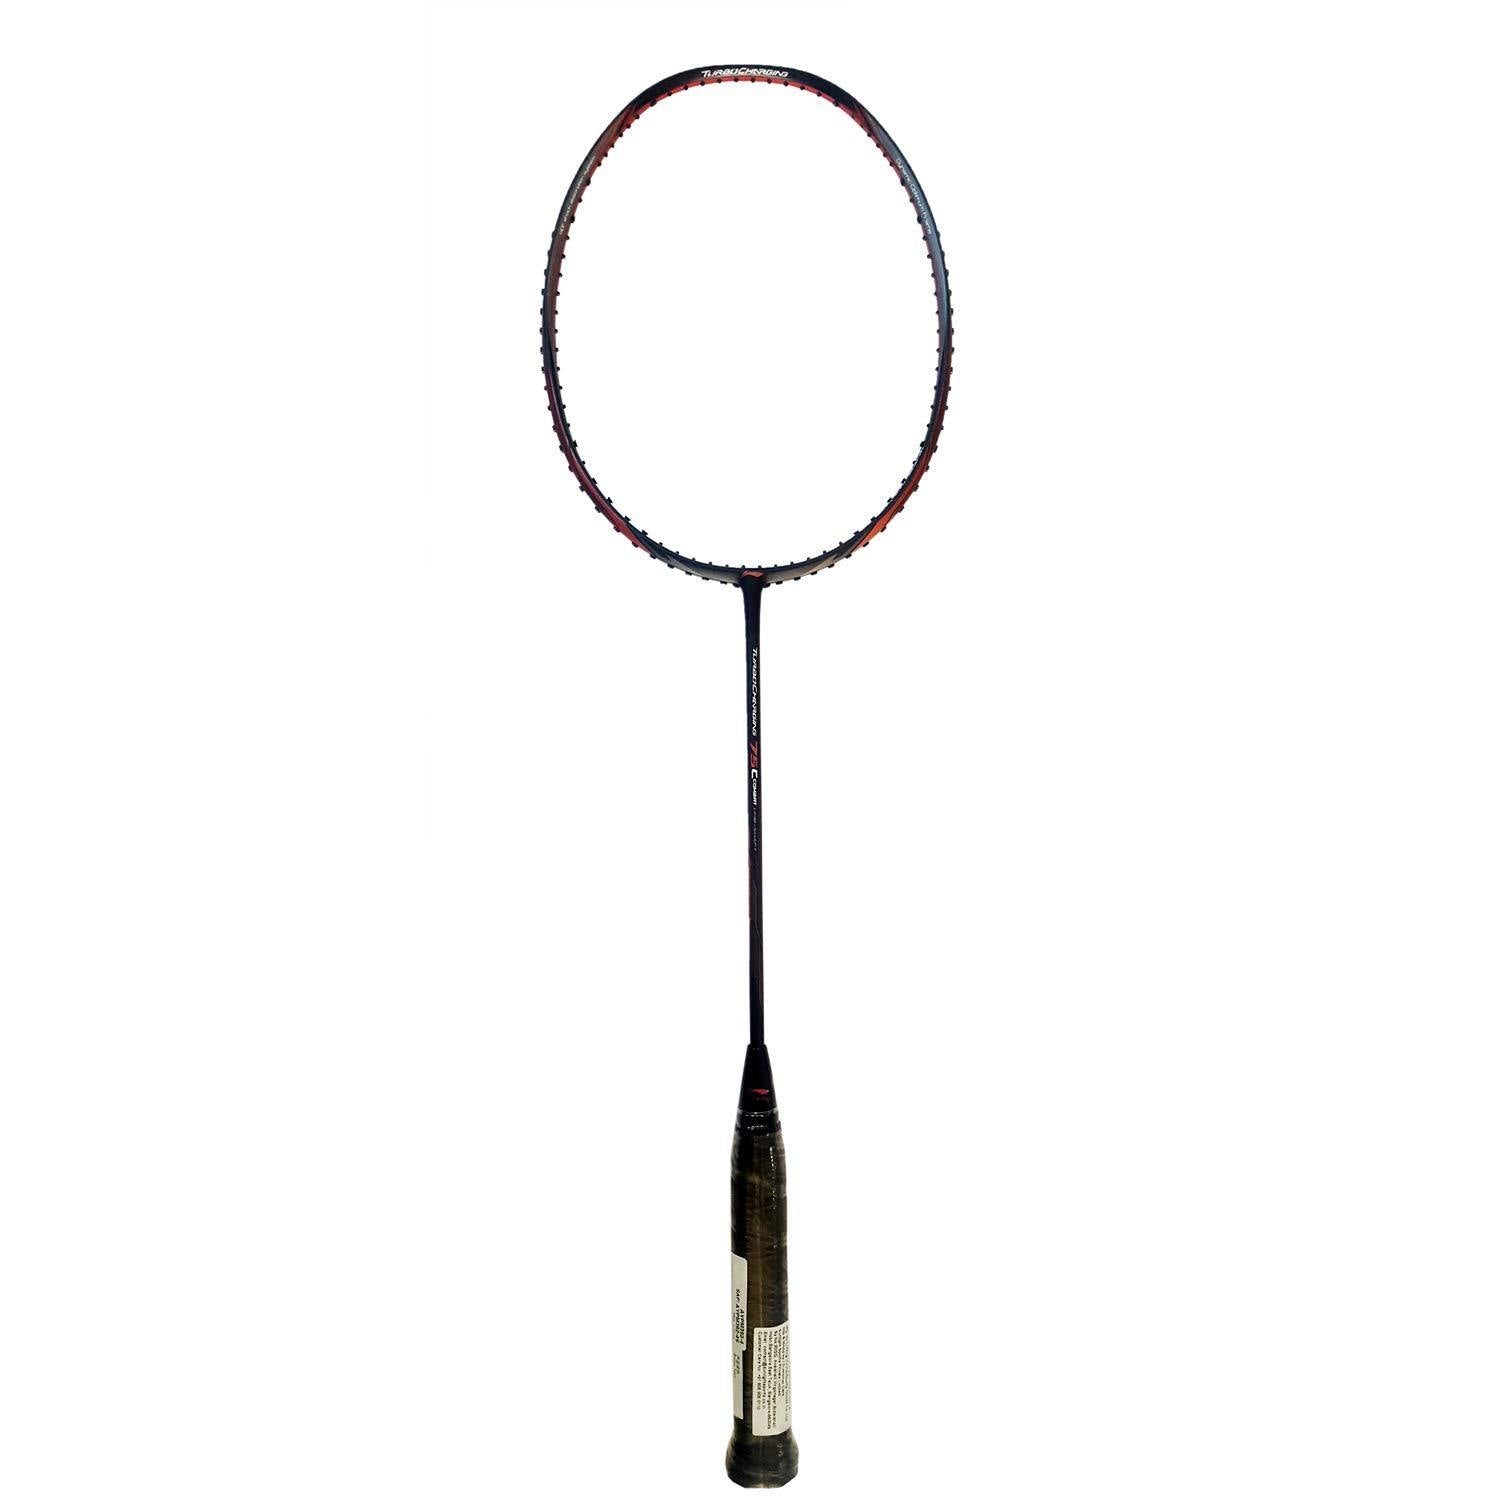 Li-Ning Turbo Charging 75C Badminton Racquet - Black/Red - Best Price online Prokicksports.com